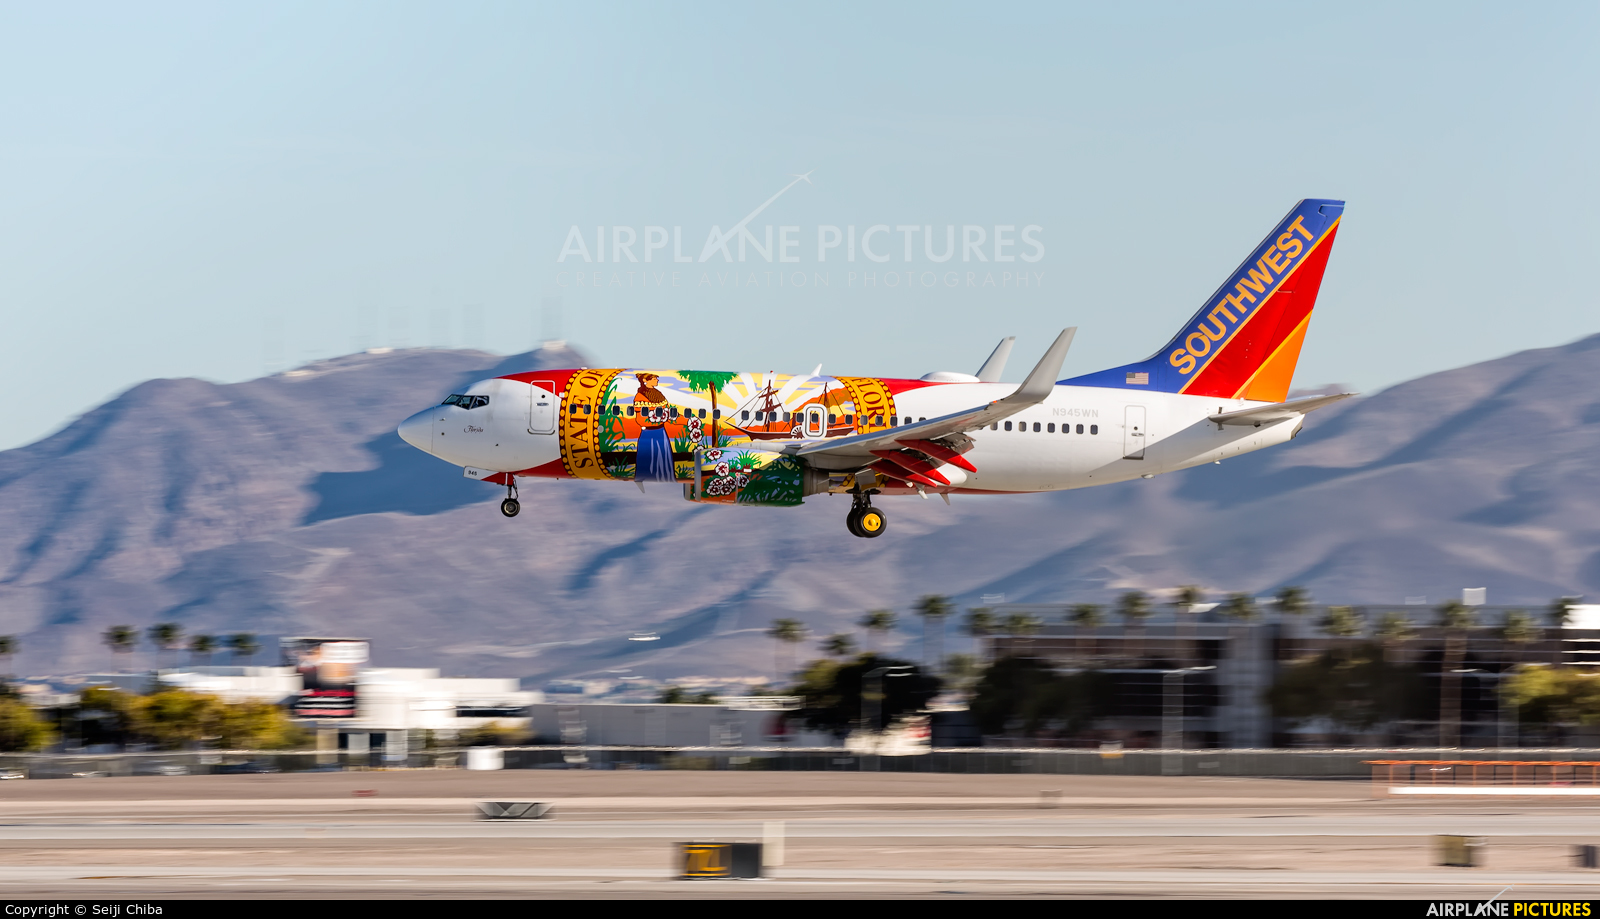 Southwest Airlines N945WN aircraft at Las Vegas - McCarran Intl